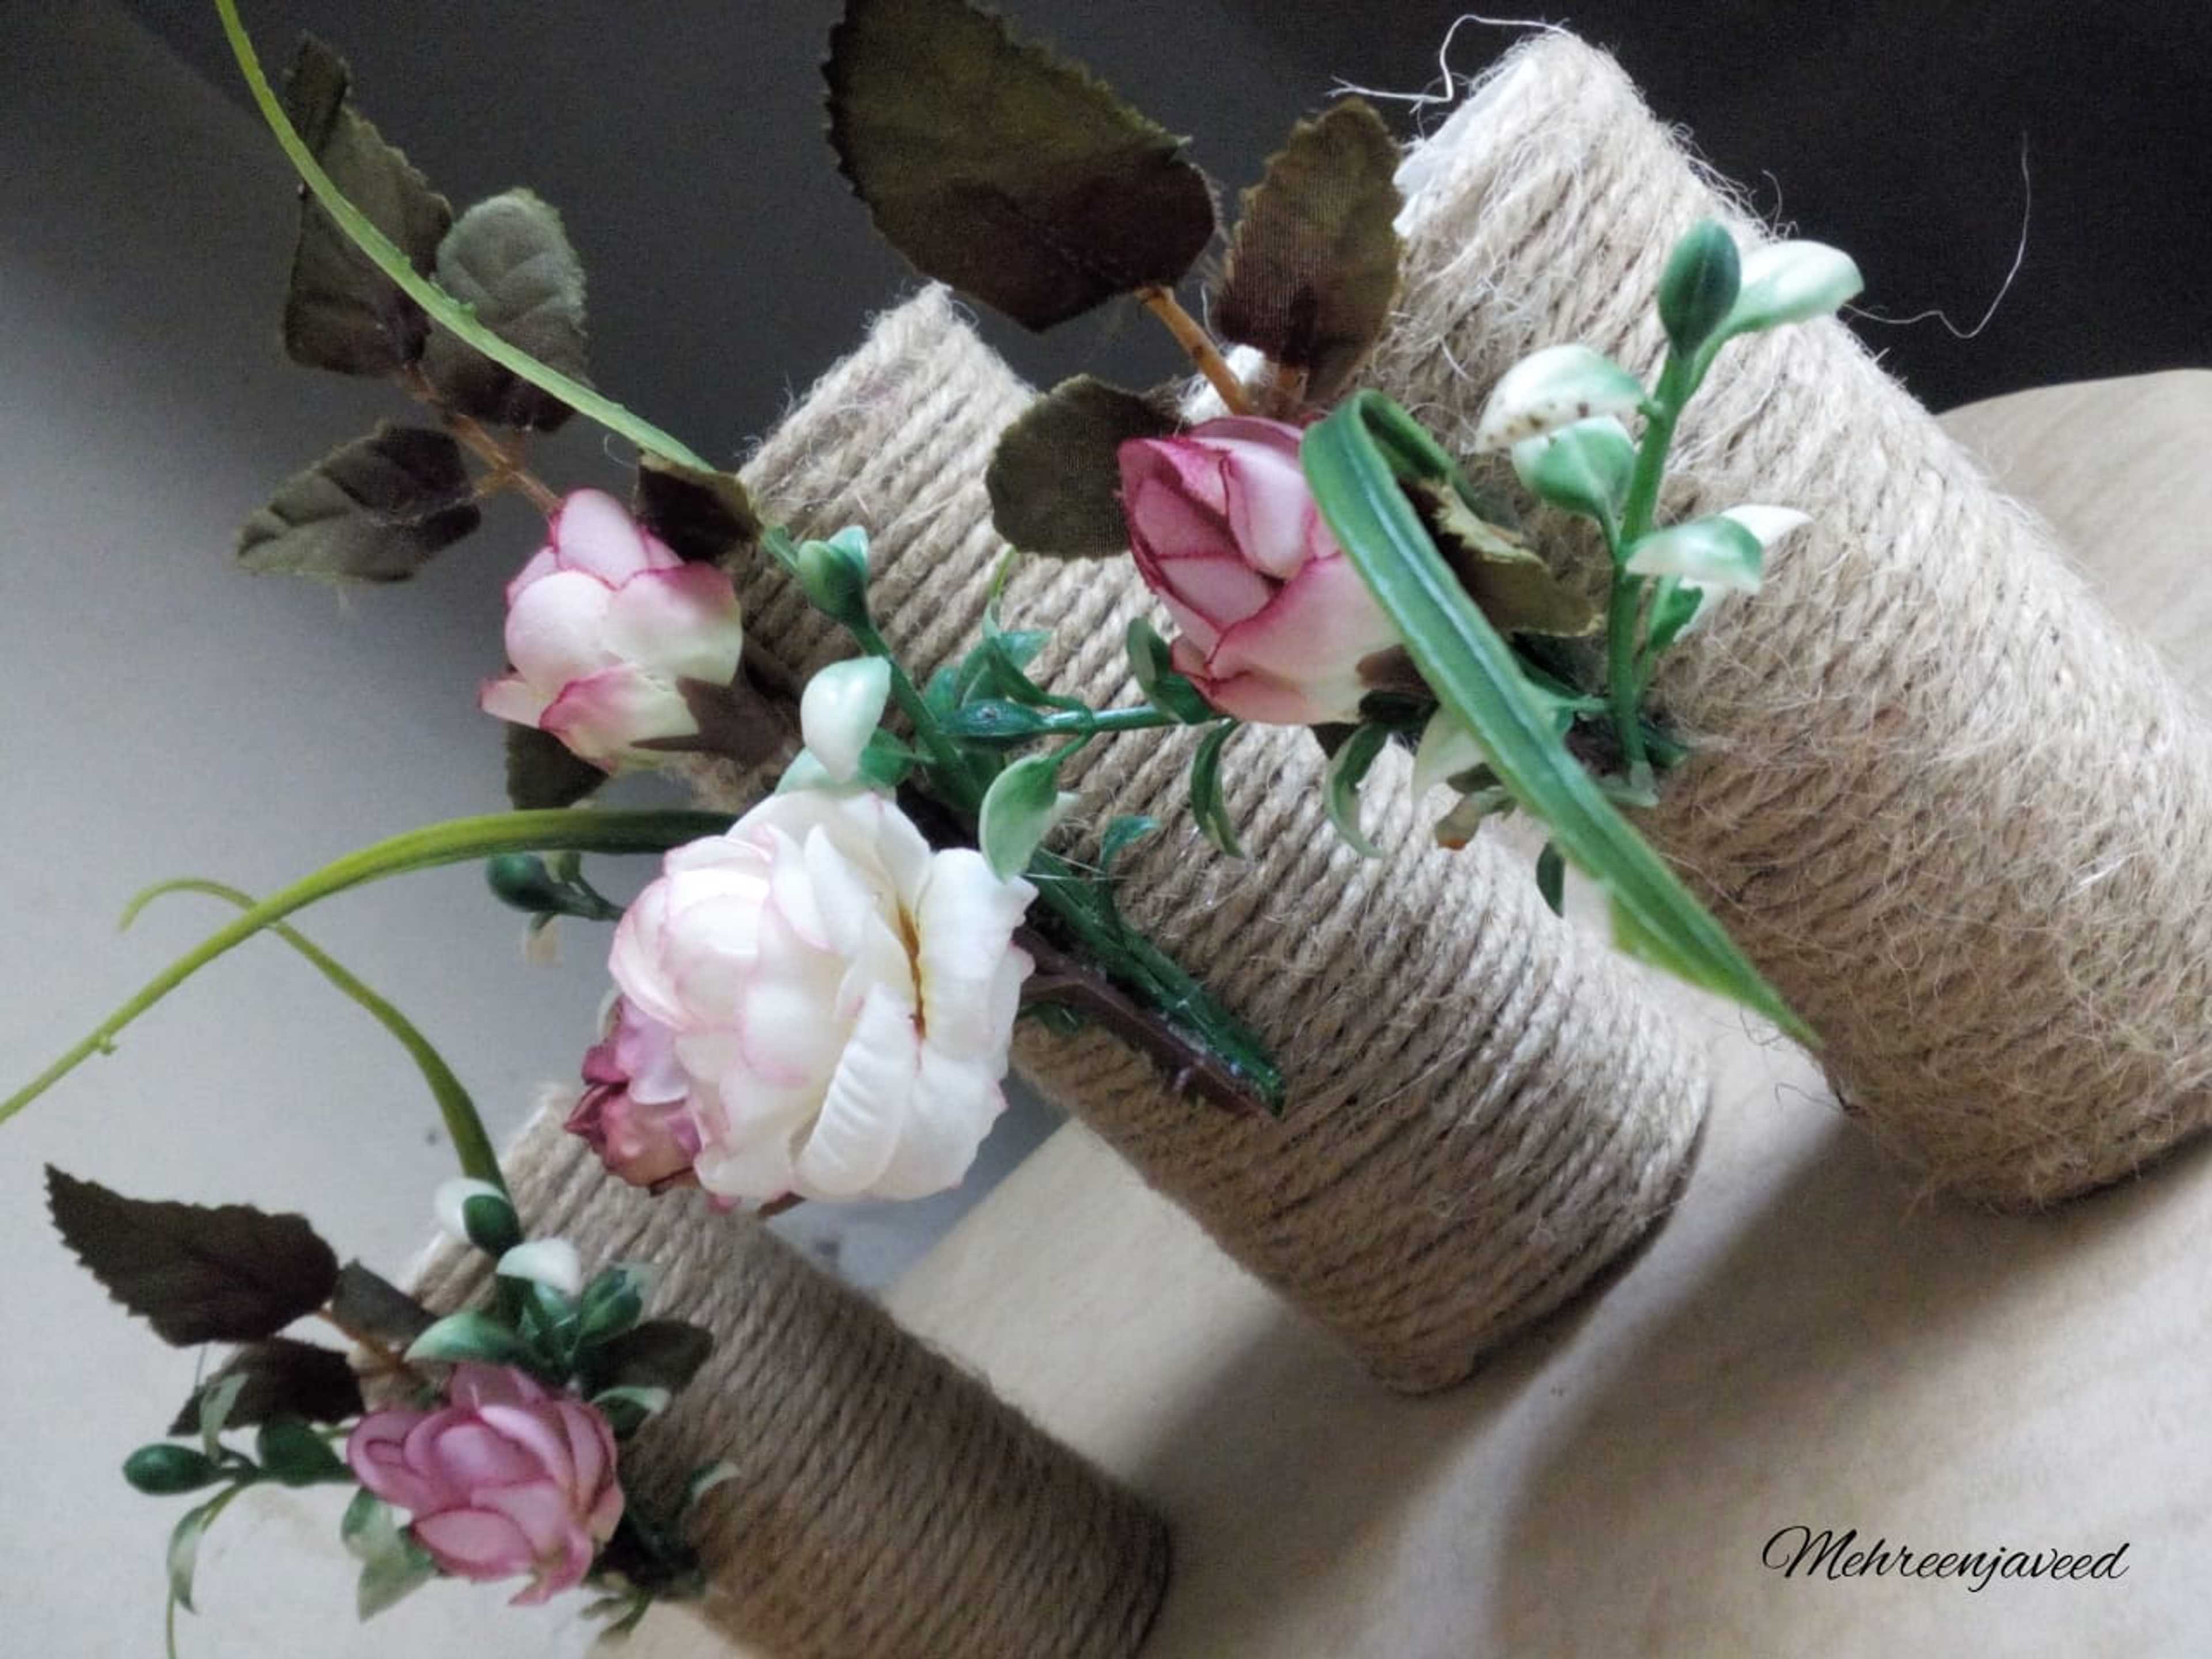 Flowers vase from glass bottle using rope thread